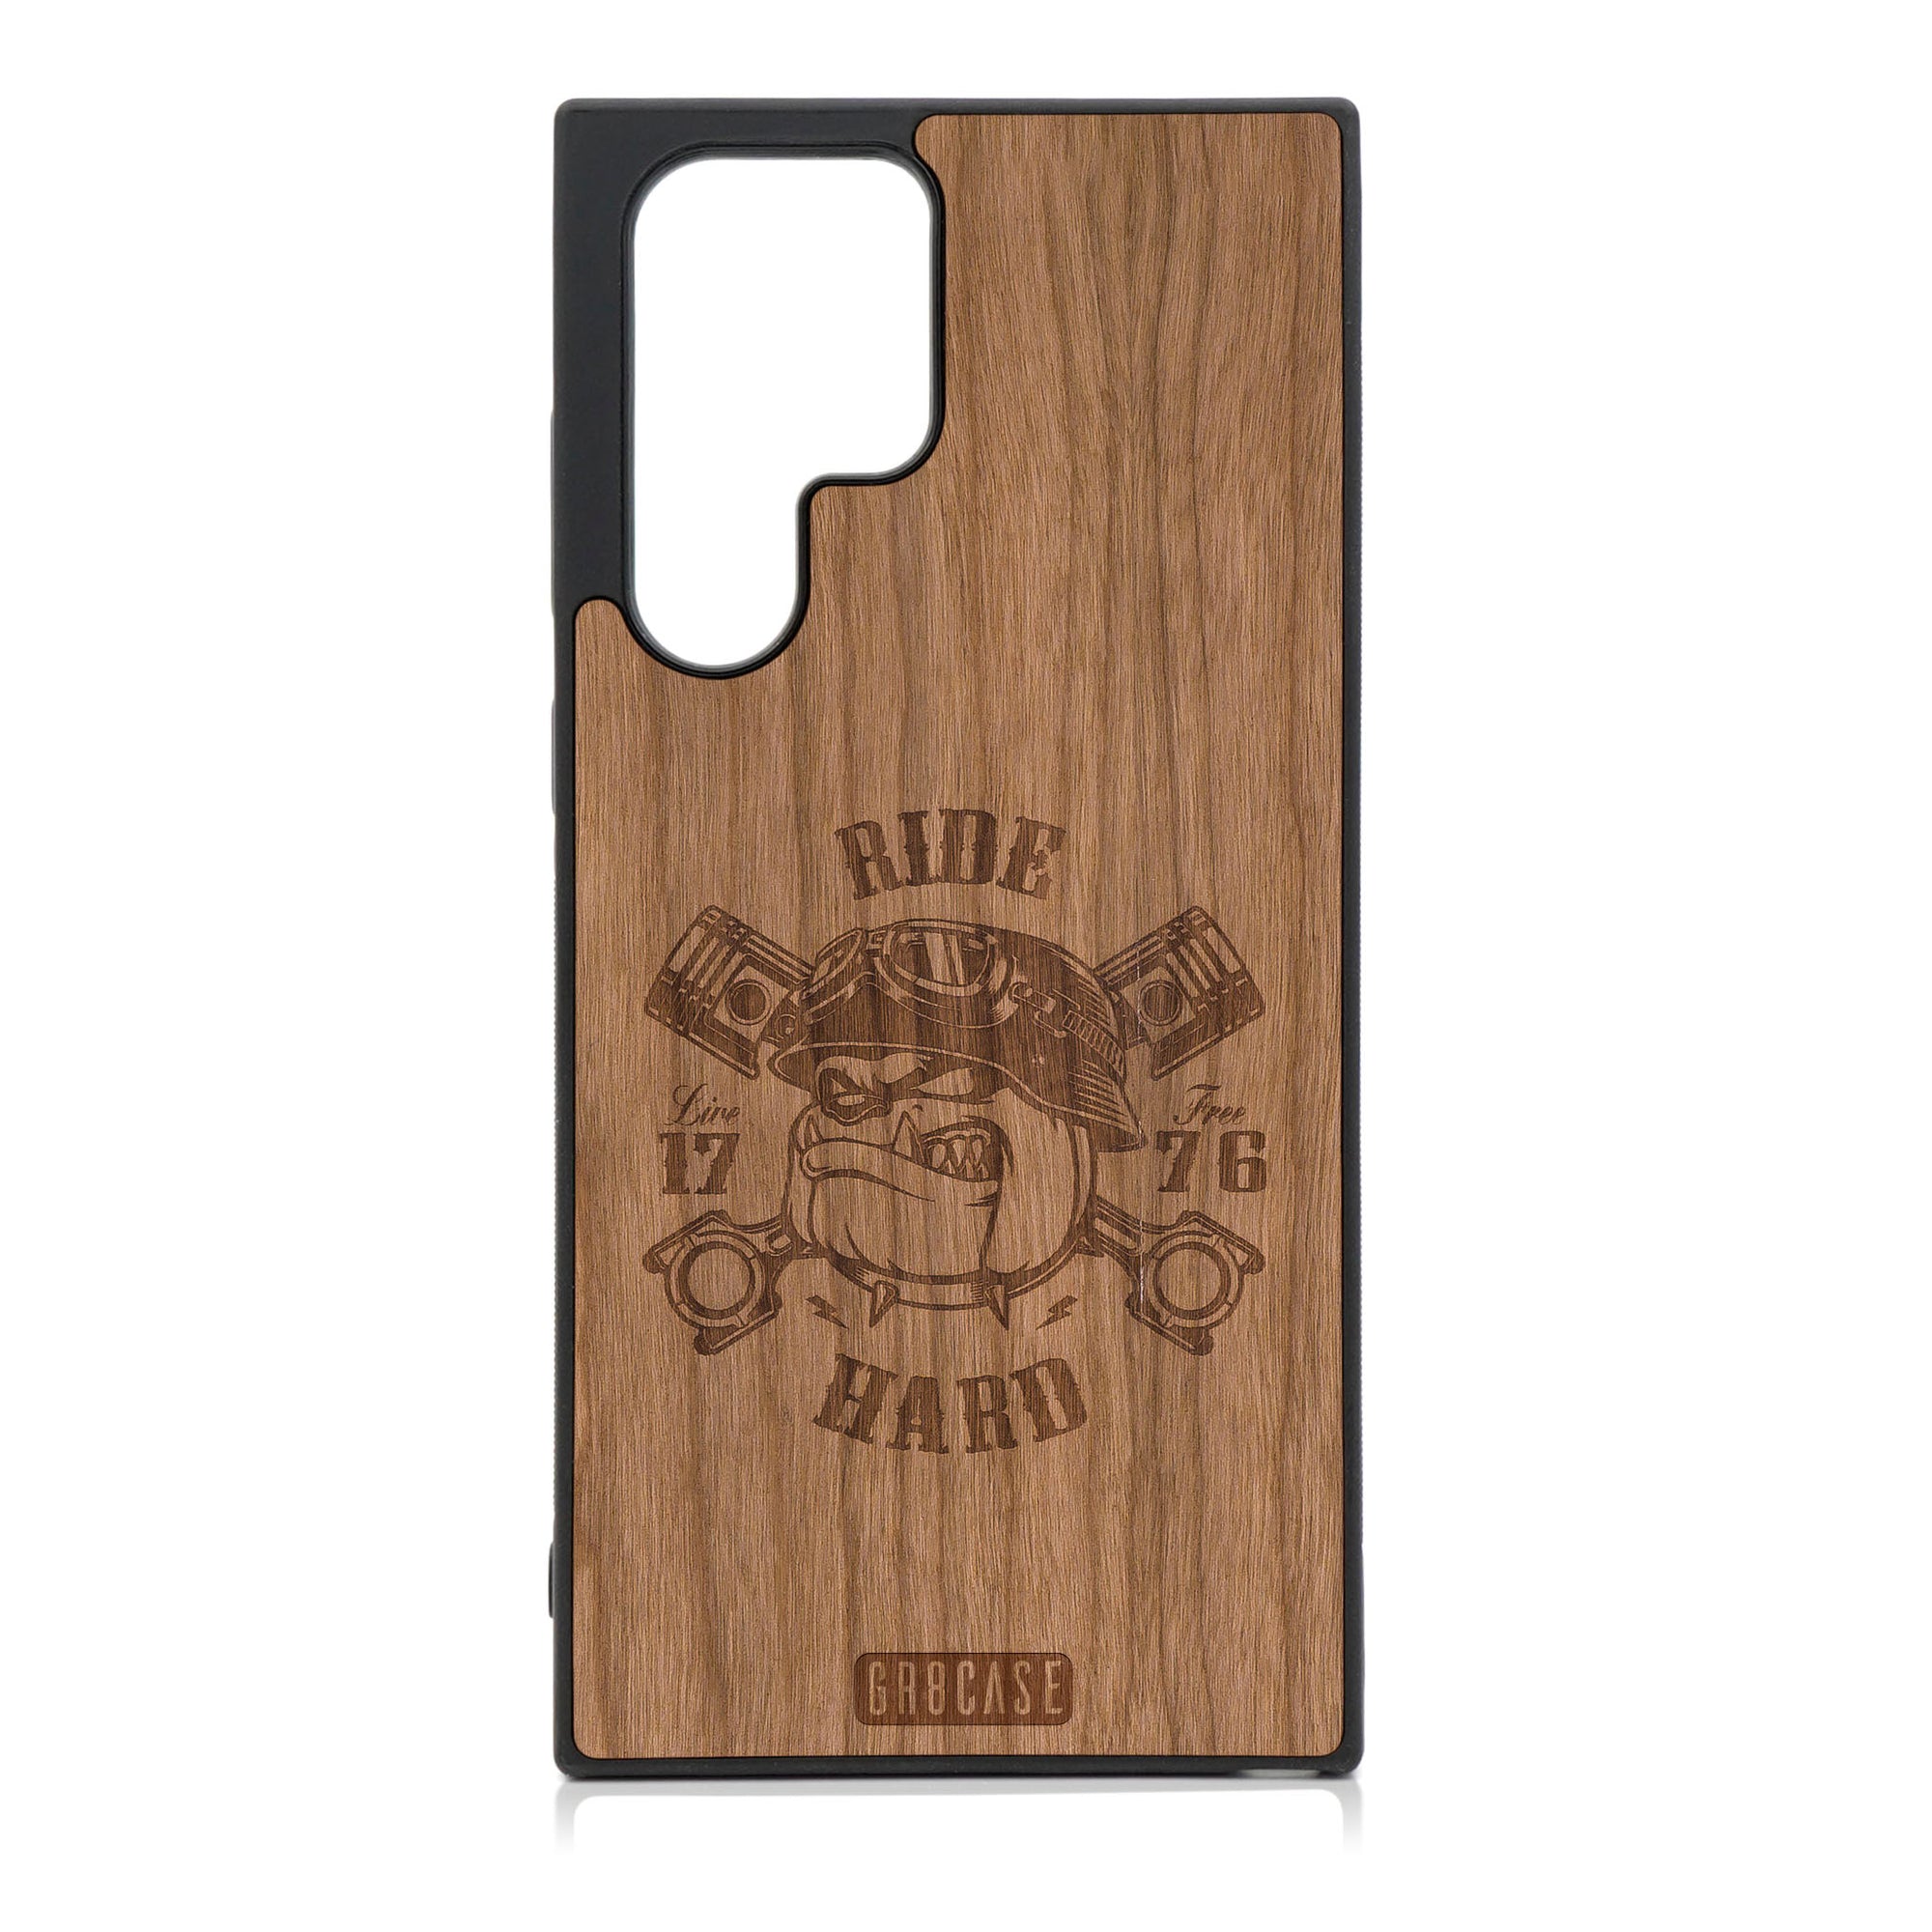 Ride Hard Live Free (Biker Dog) Design Wood Case For Galaxy S22 Ultra